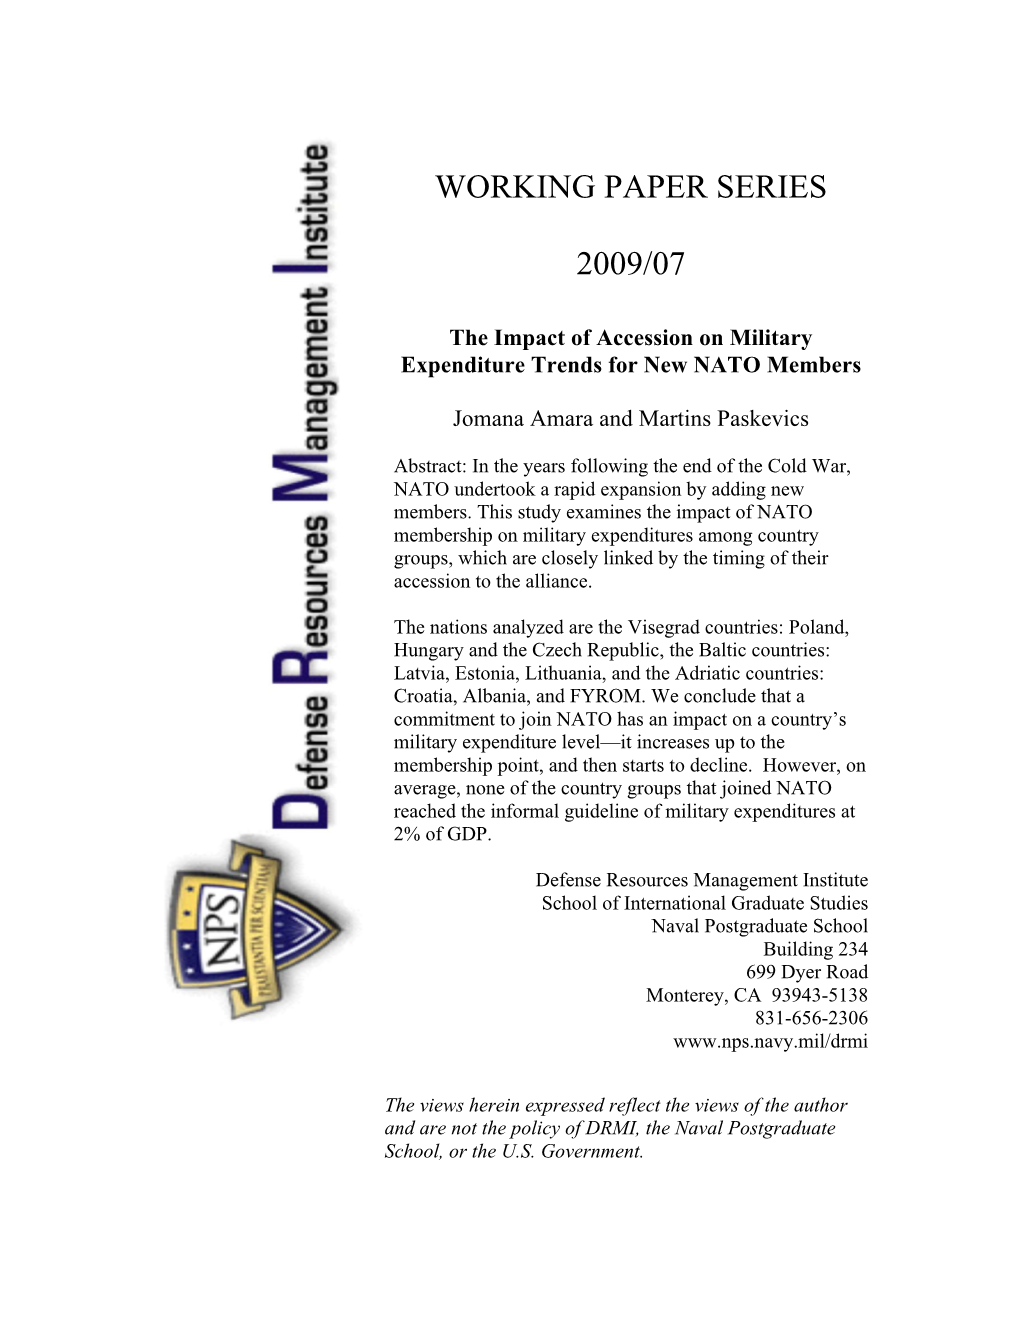 Working Paper Series 2009/07